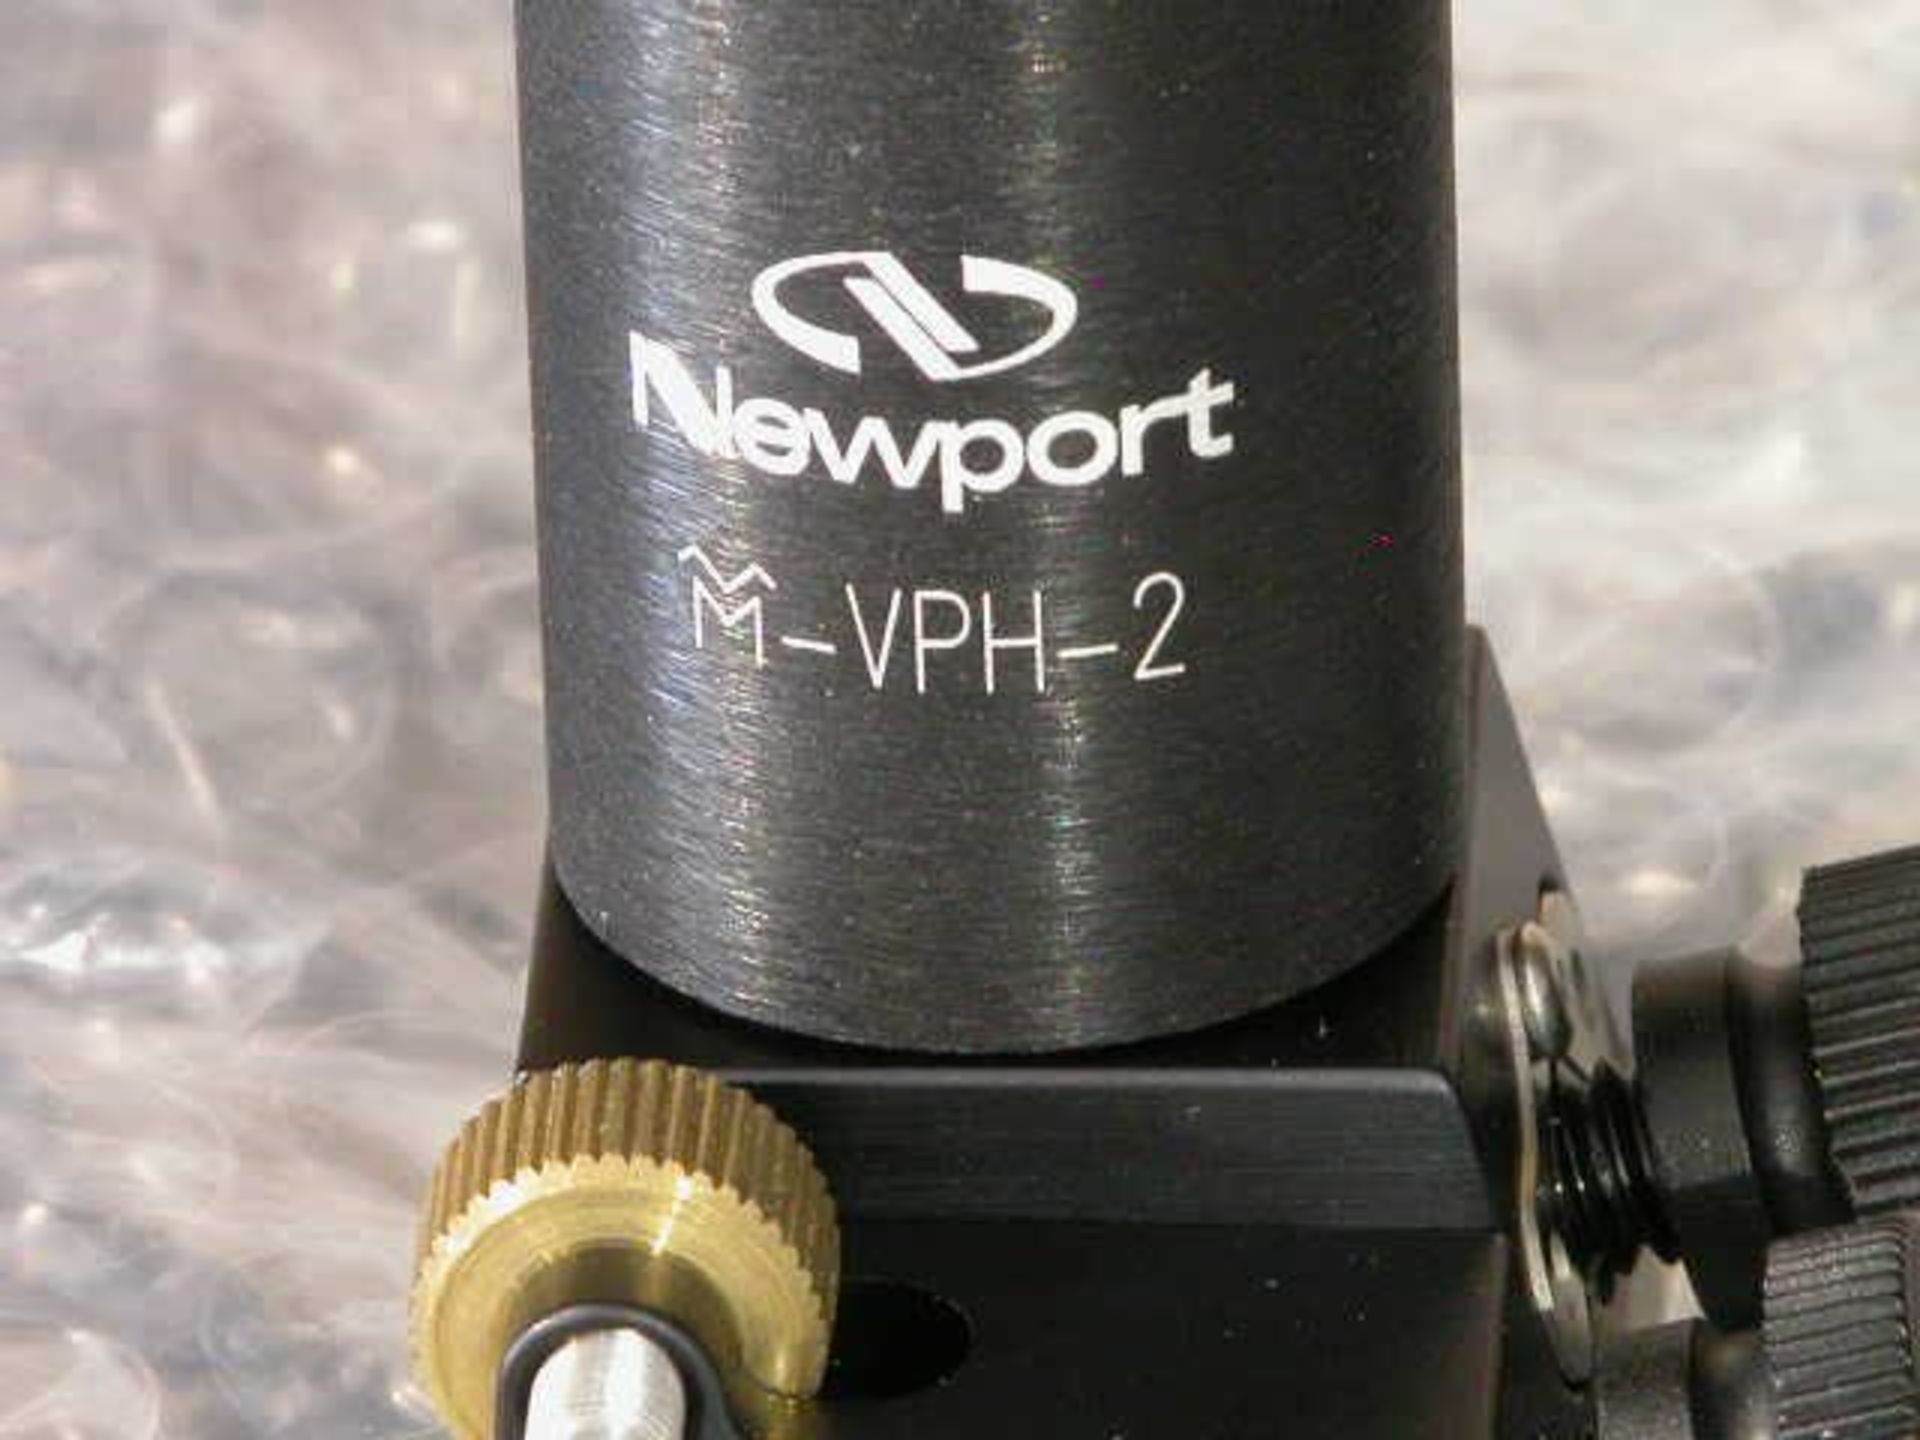 Beckman Newport M-VPH-2 # 6857611 Beam Splitter Rev A S/A BM SPLTR STG R488BNM, Qty 1, 331882353548 - Image 5 of 5